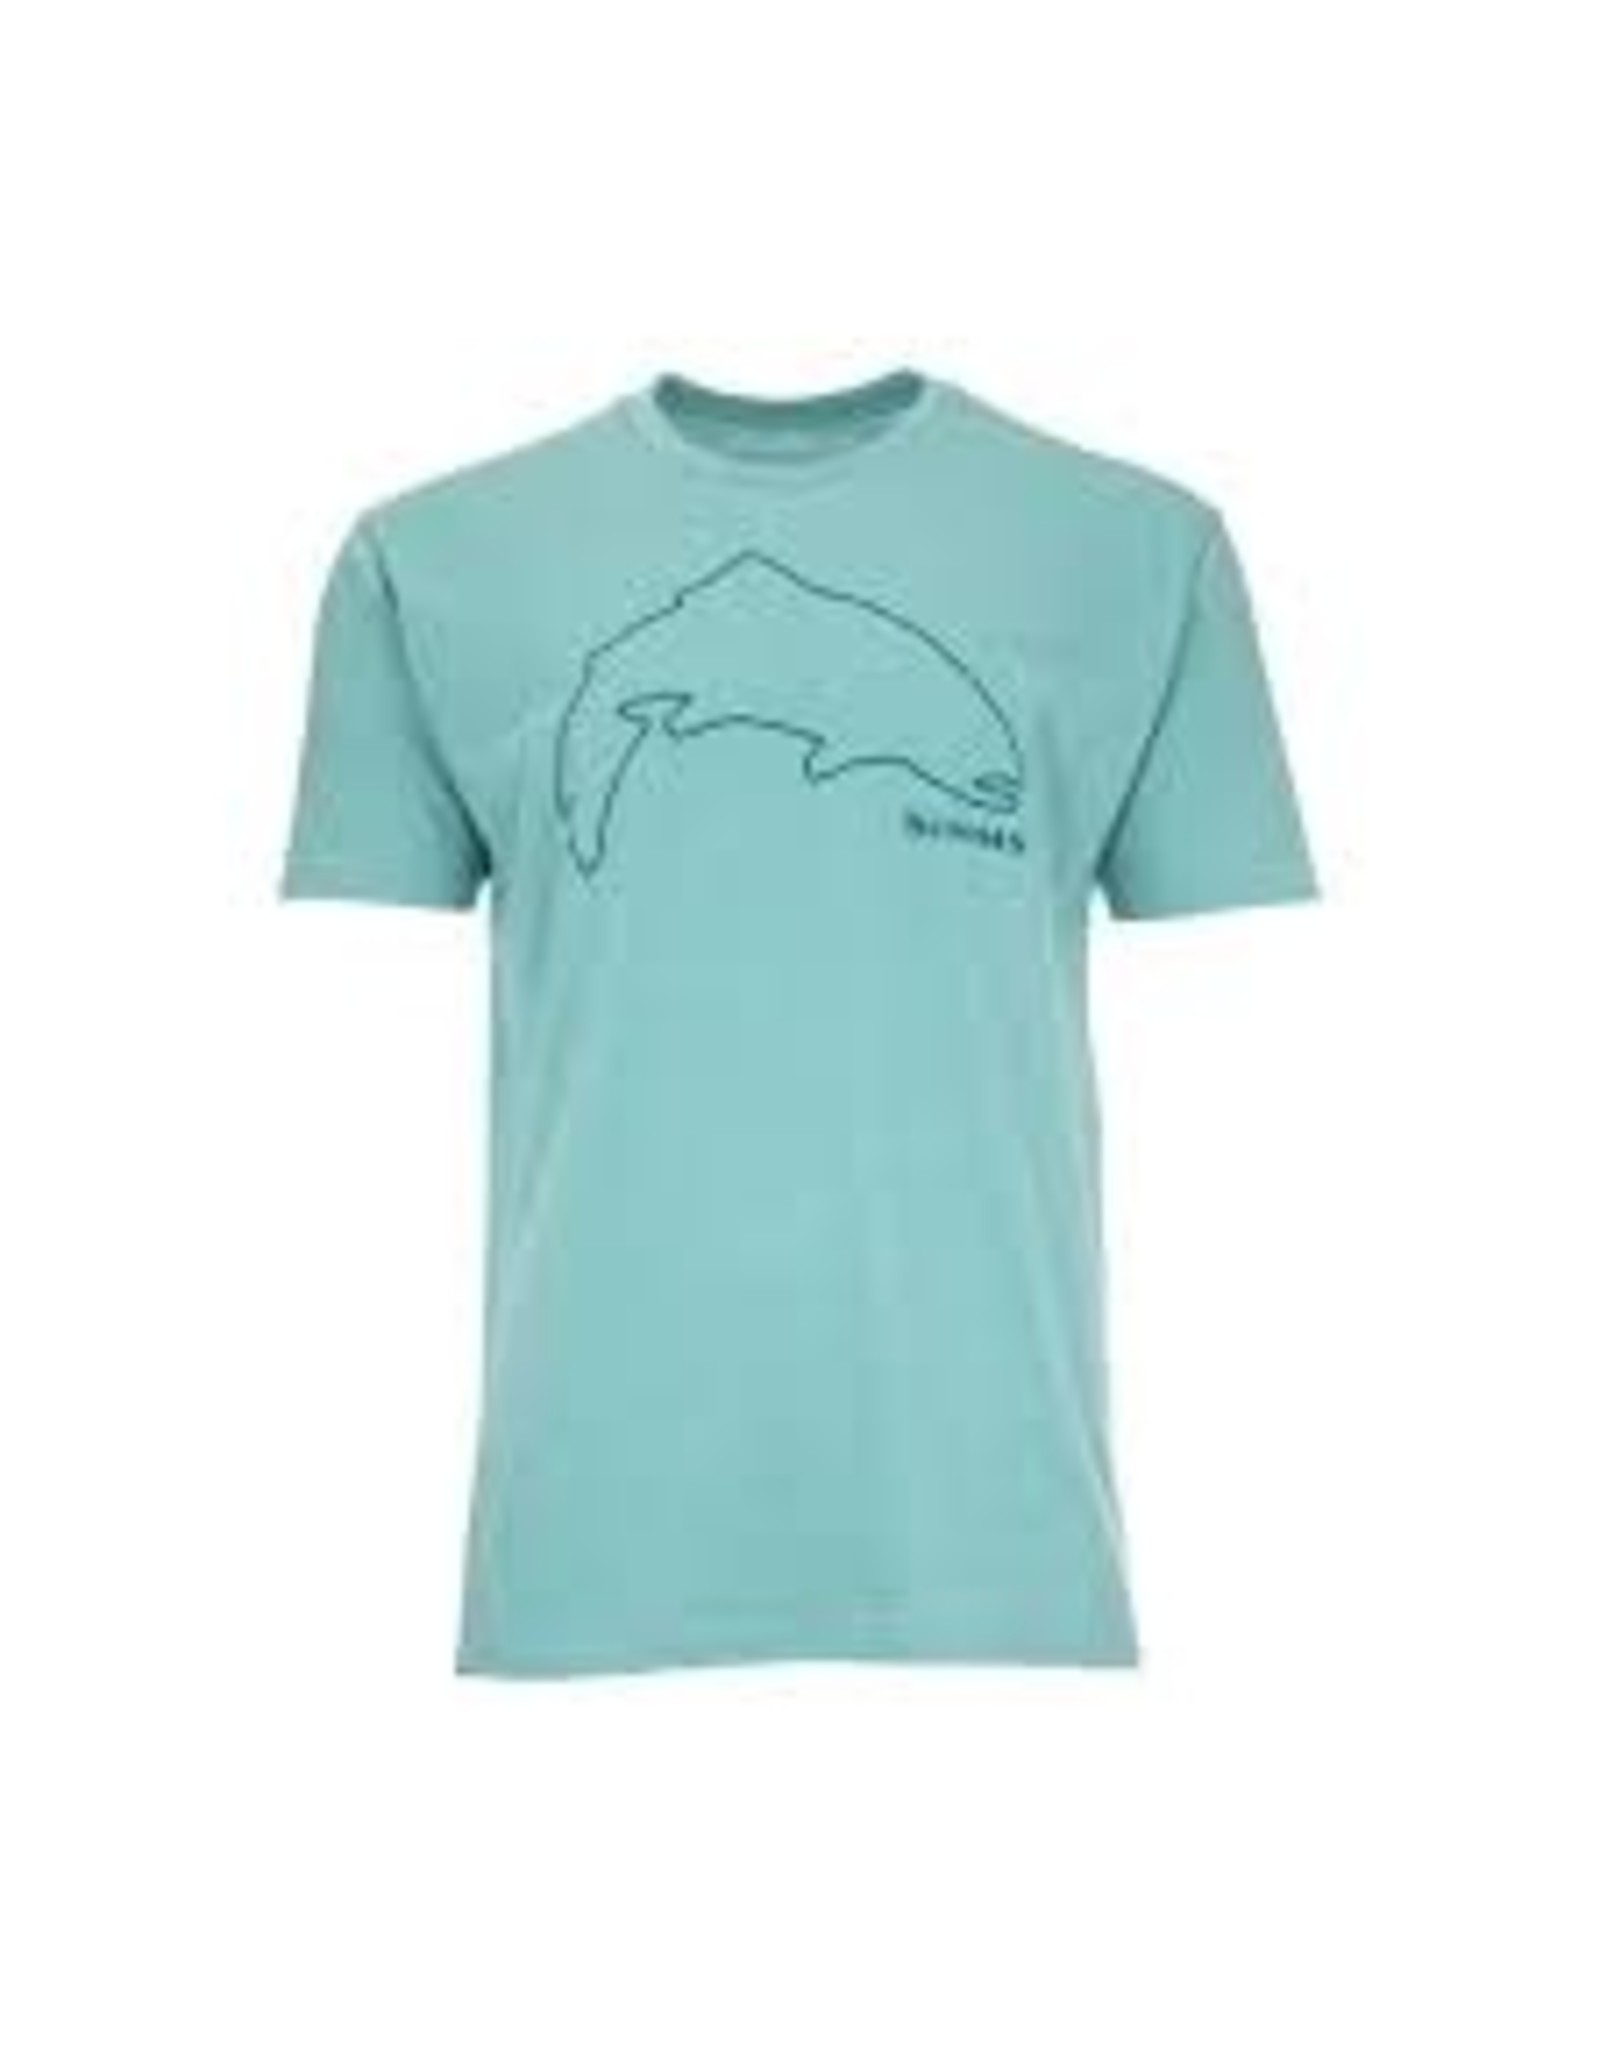 Simms Simms - M's Trout Outline T-Shirt